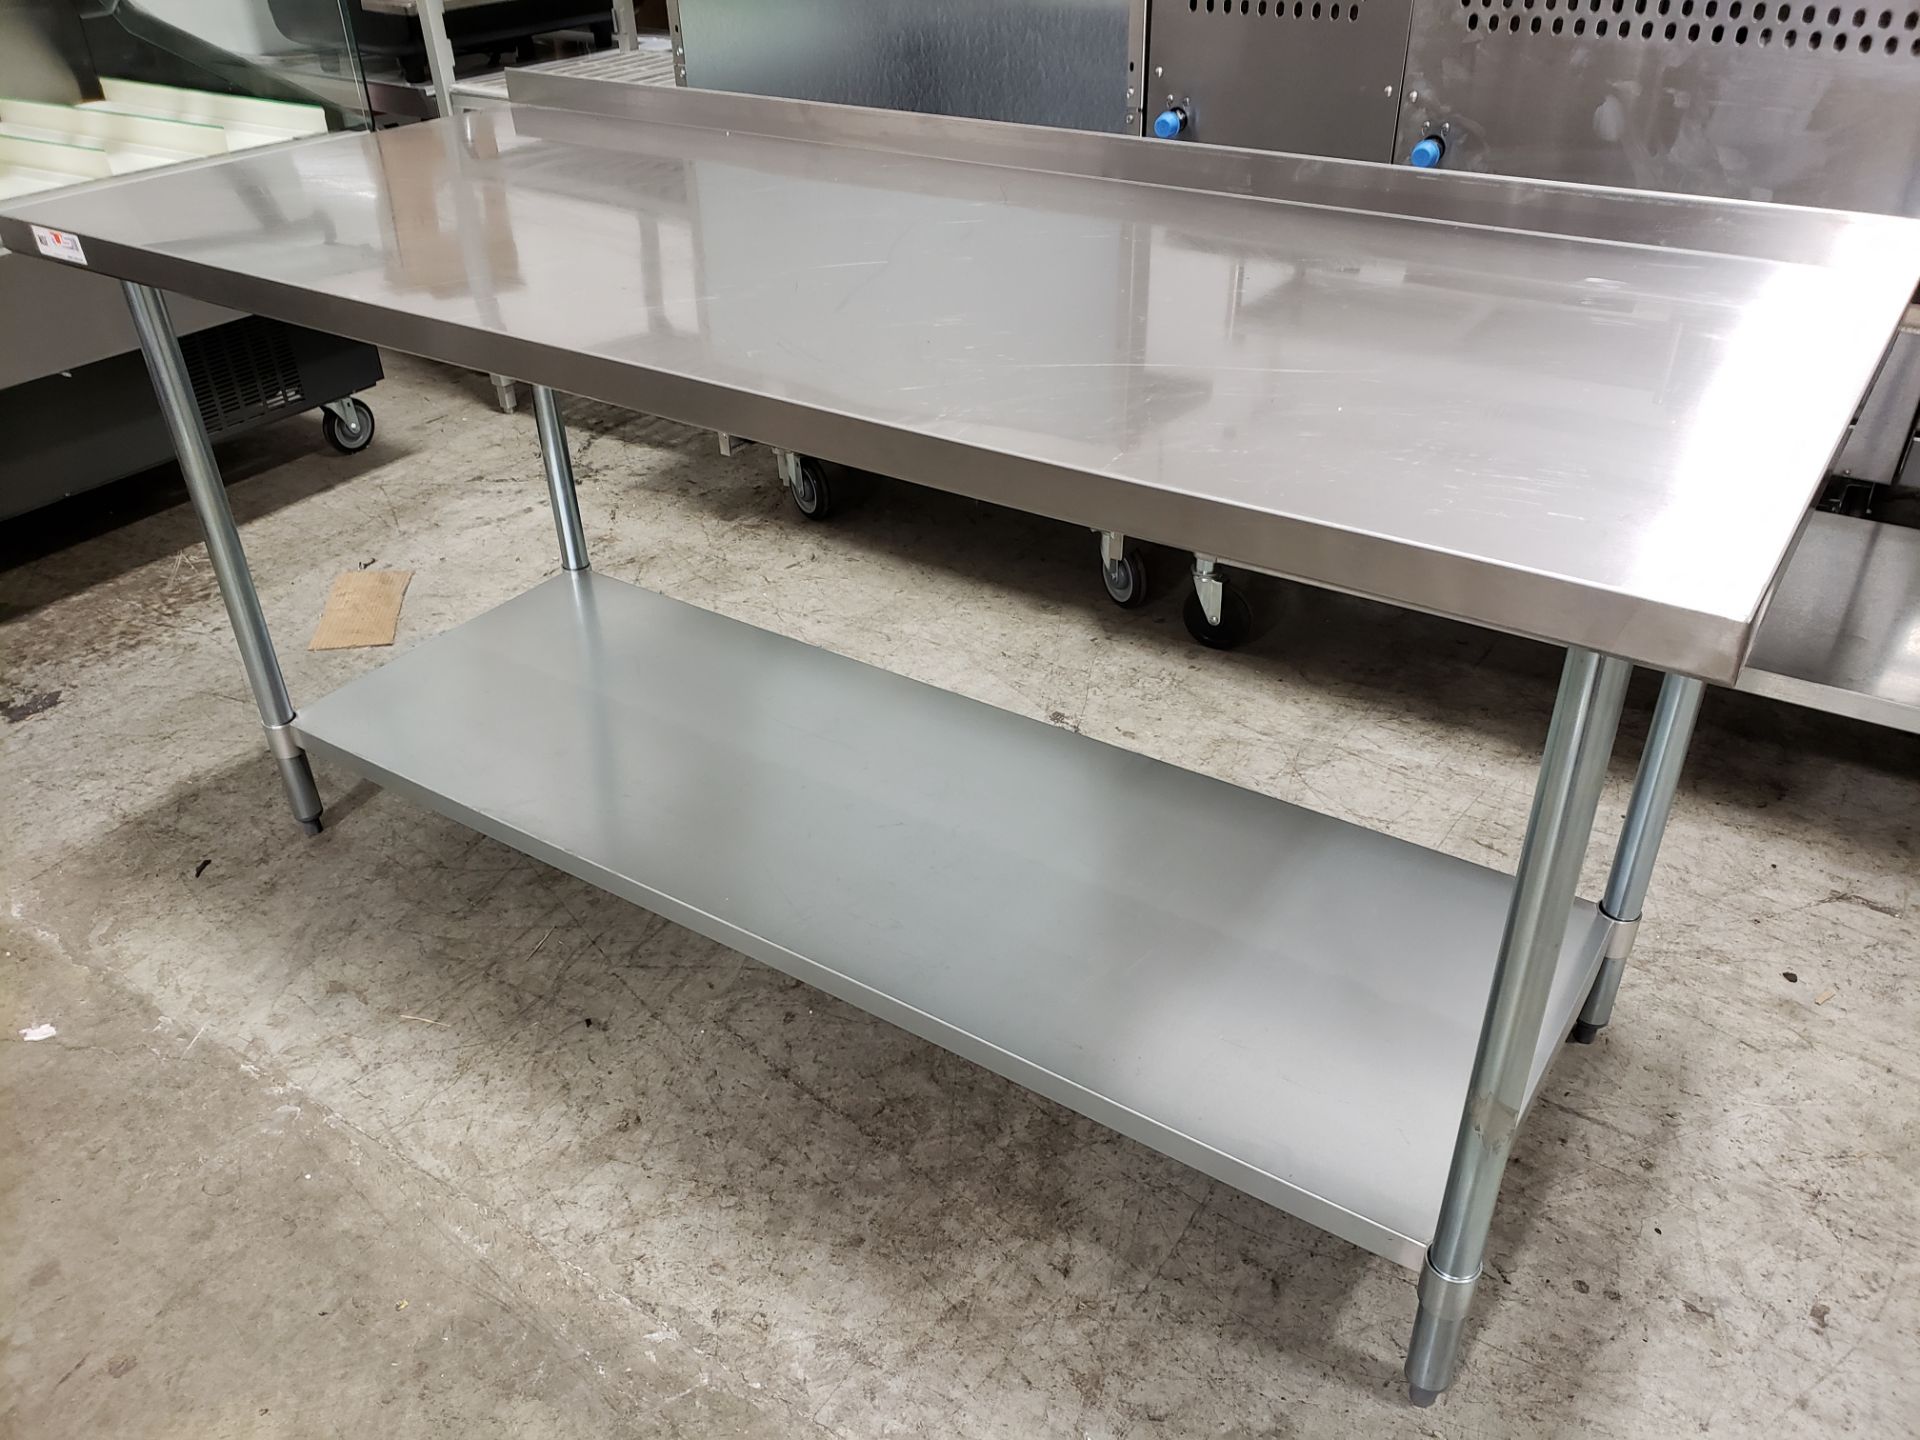 24" x 72" Stainless Work Table with Galvanized Under Shelf & 1.5" Back Splash